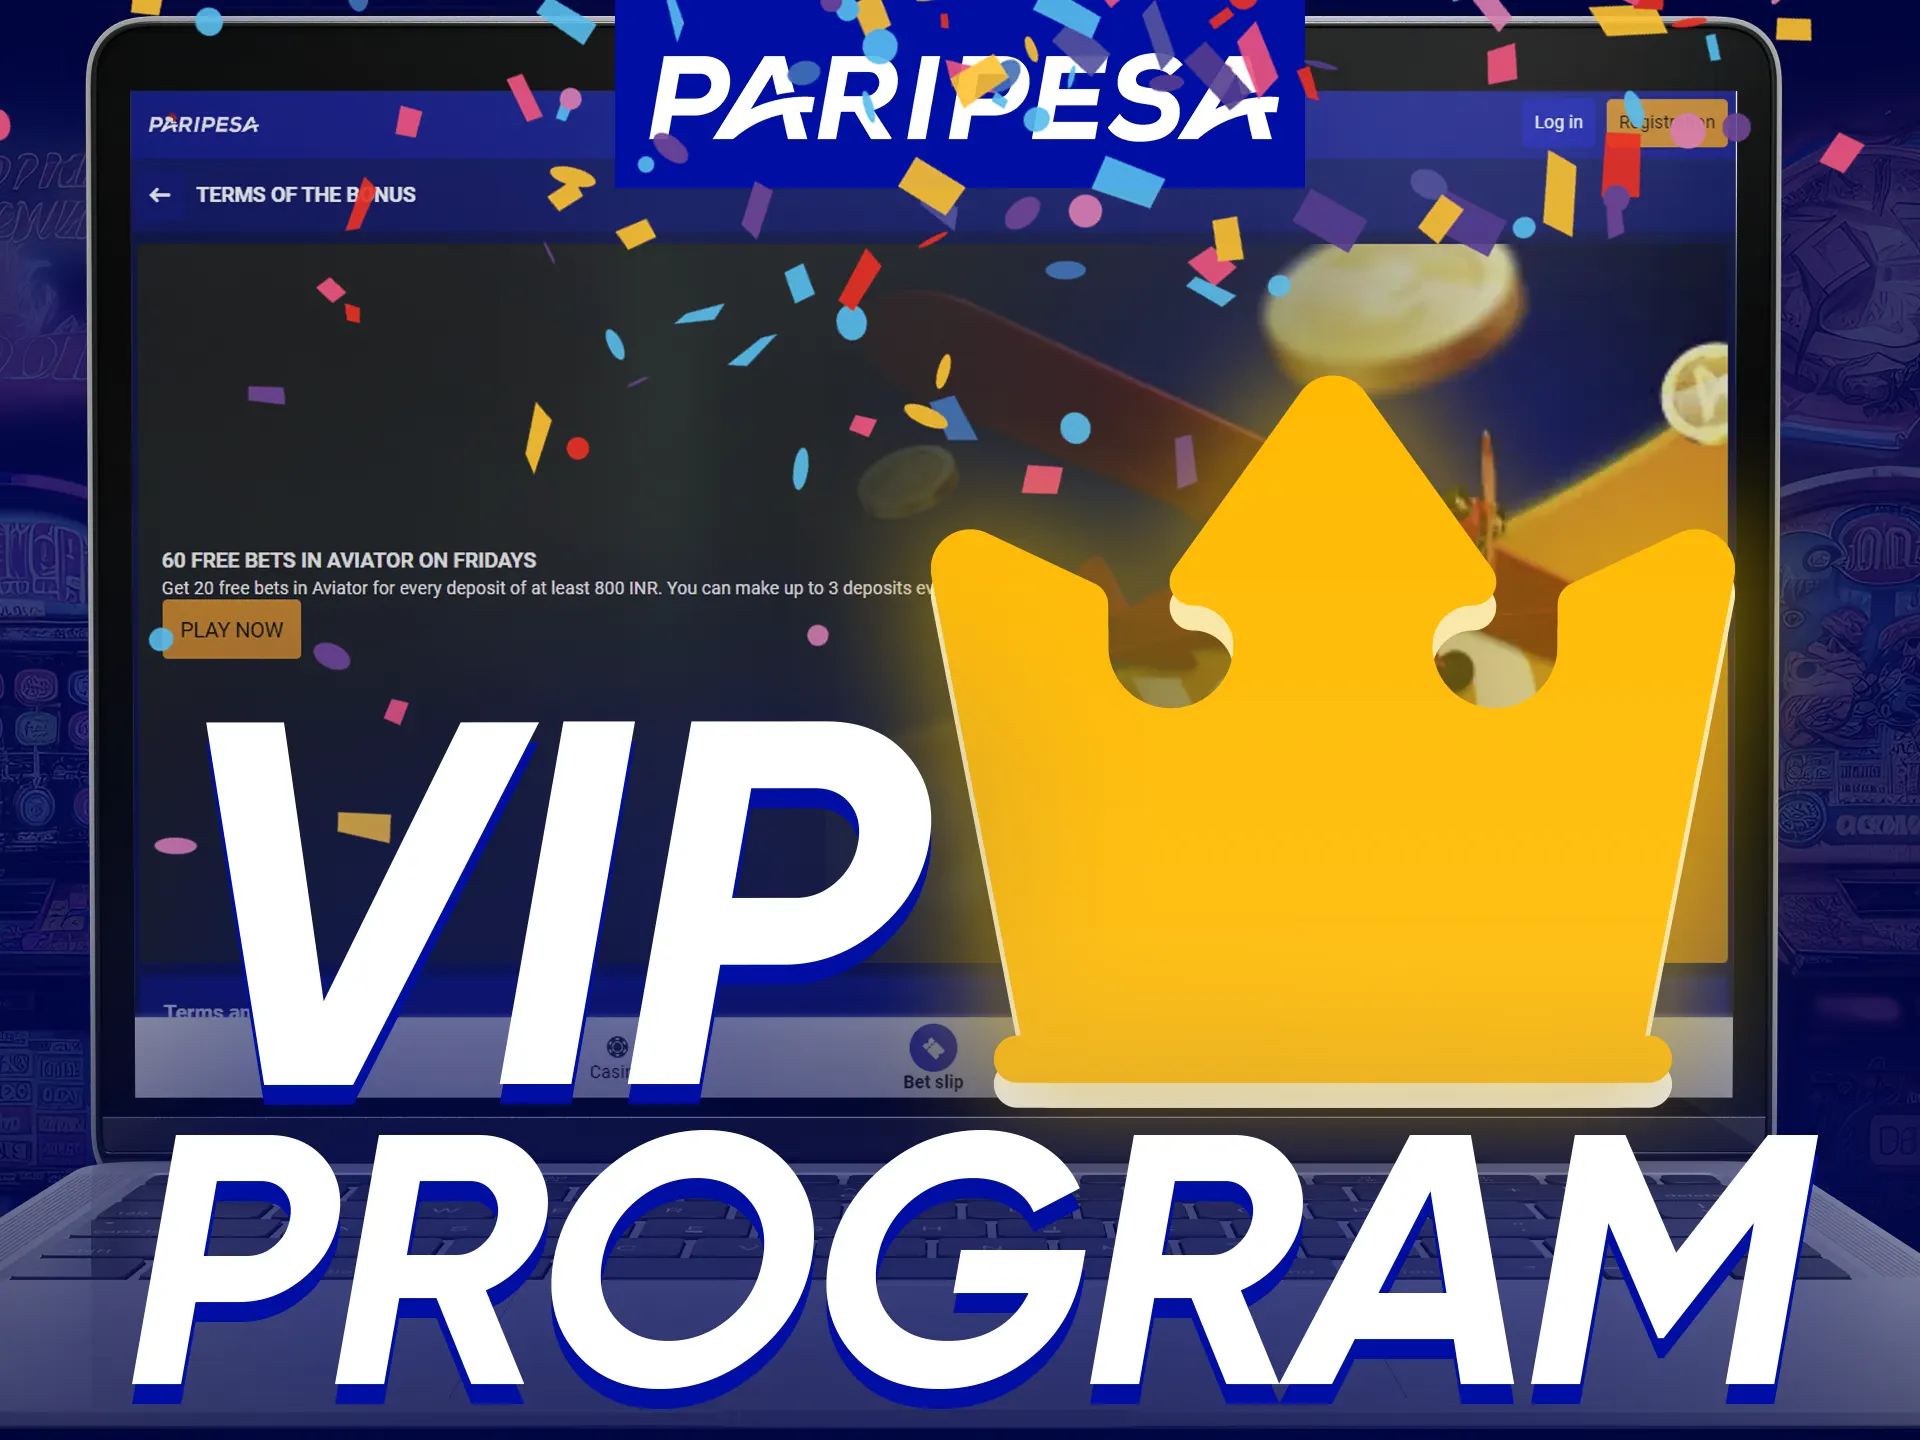 Paripesa VIP Program offers birthday freebets, VIP cashback, daily accumulator boost, and promo codes.